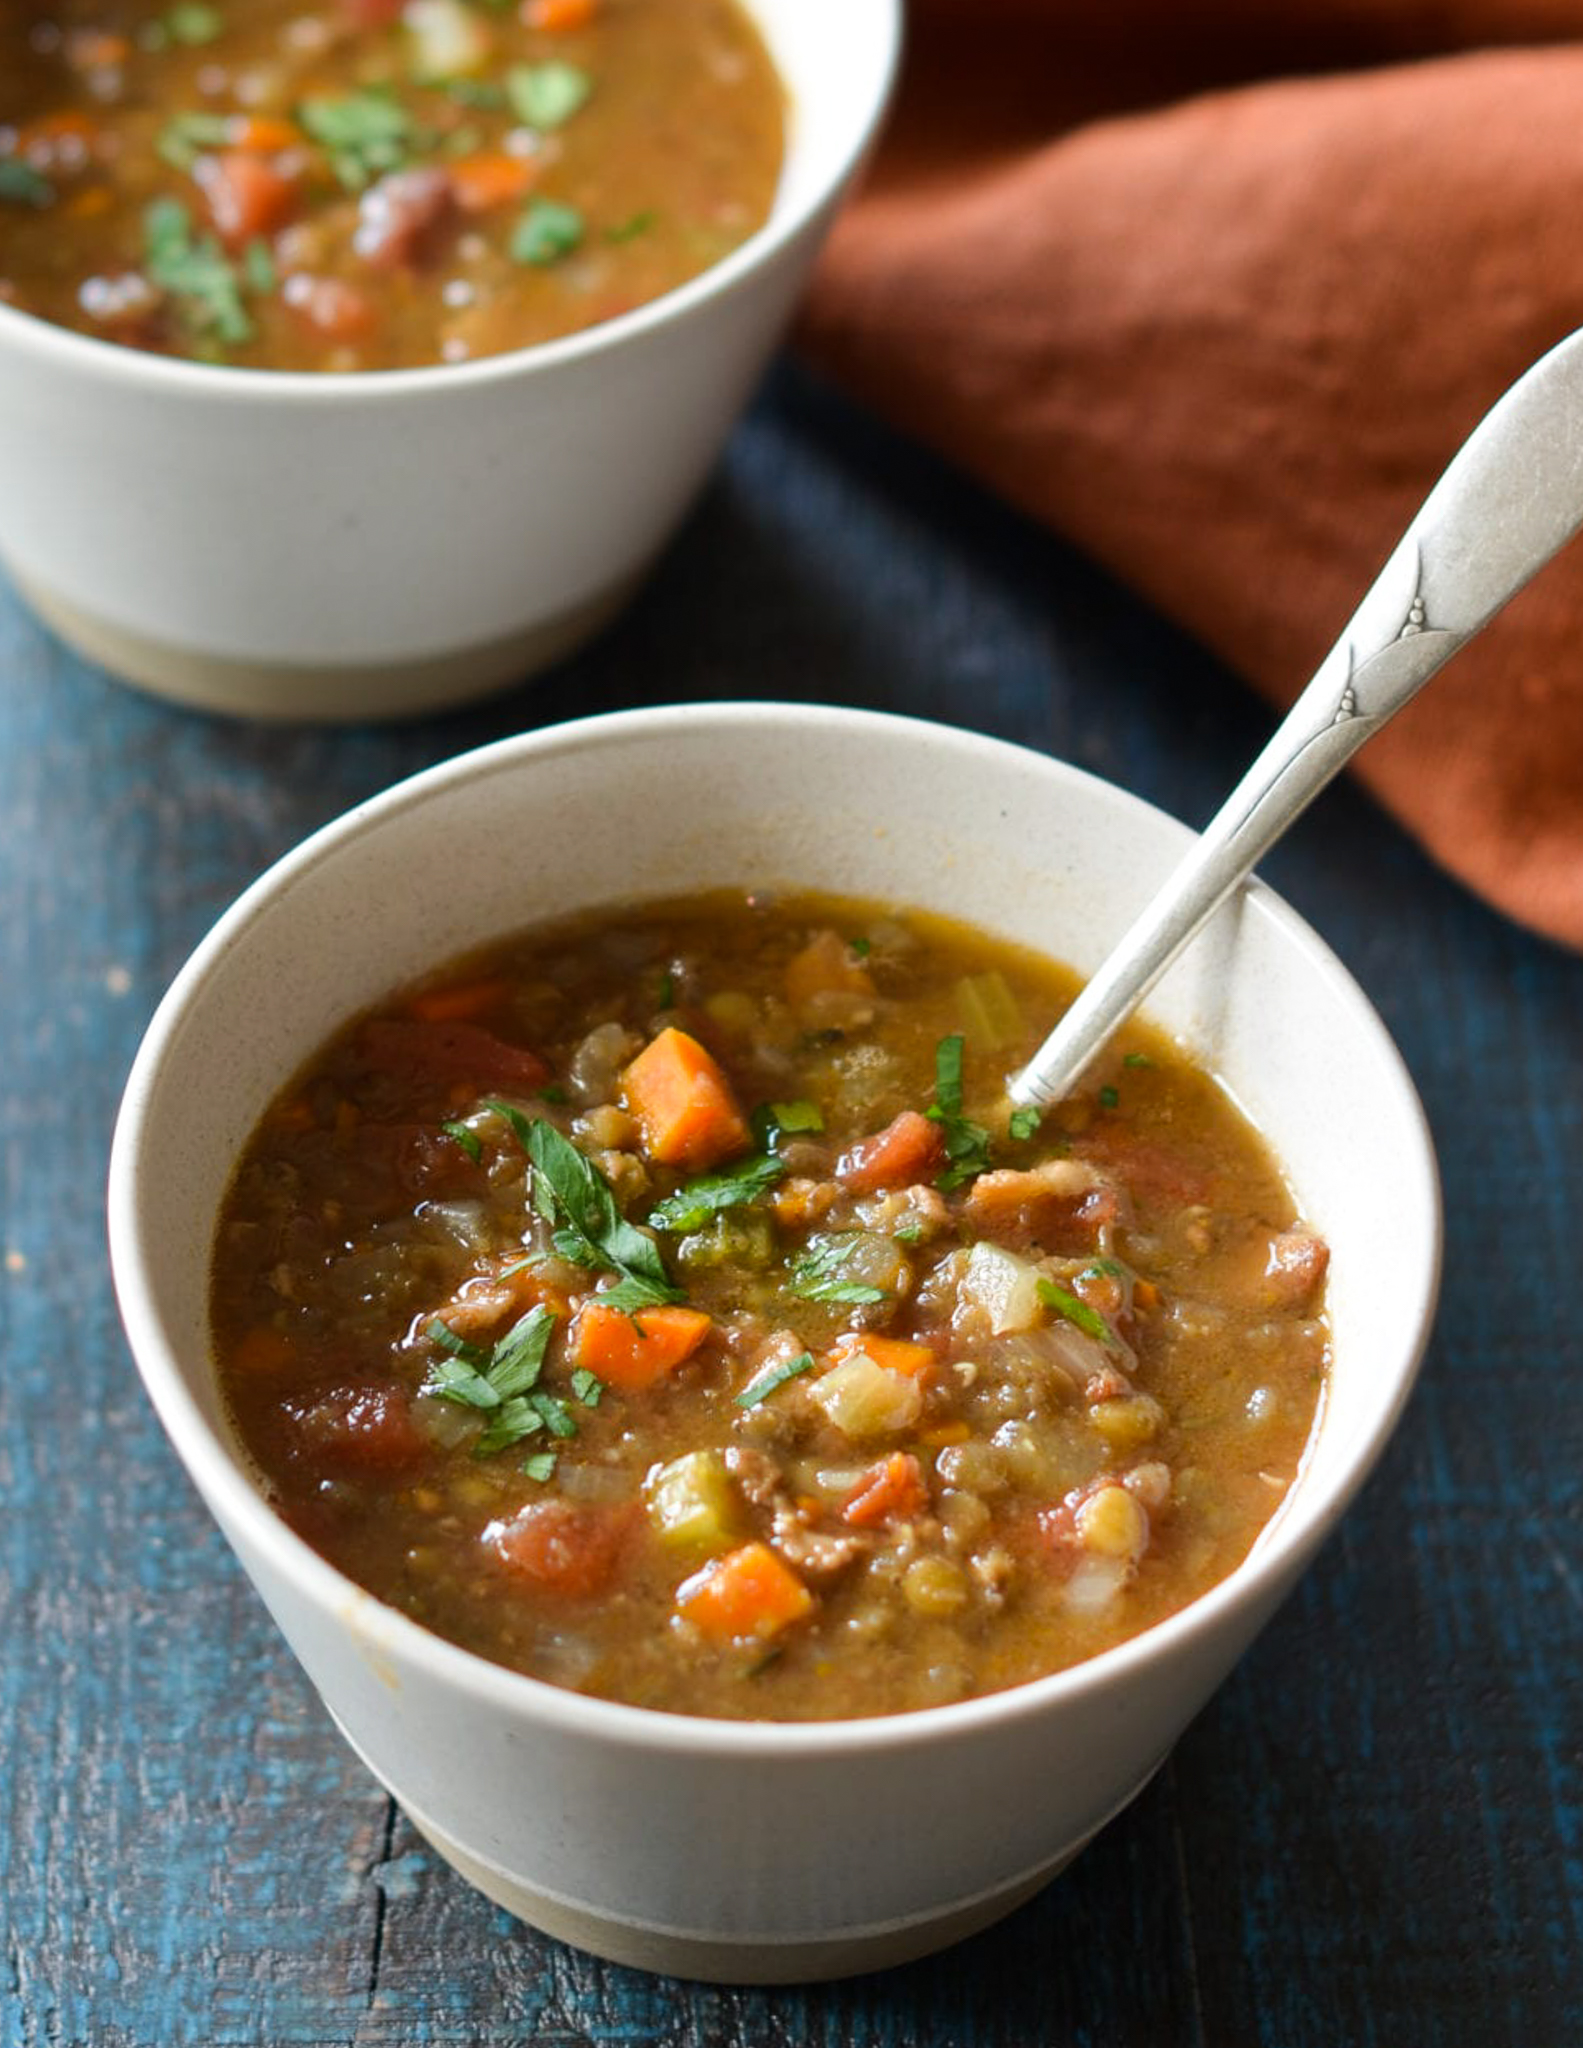 https://www.onceuponachef.com/images/2020/01/lentil-soup.jpg